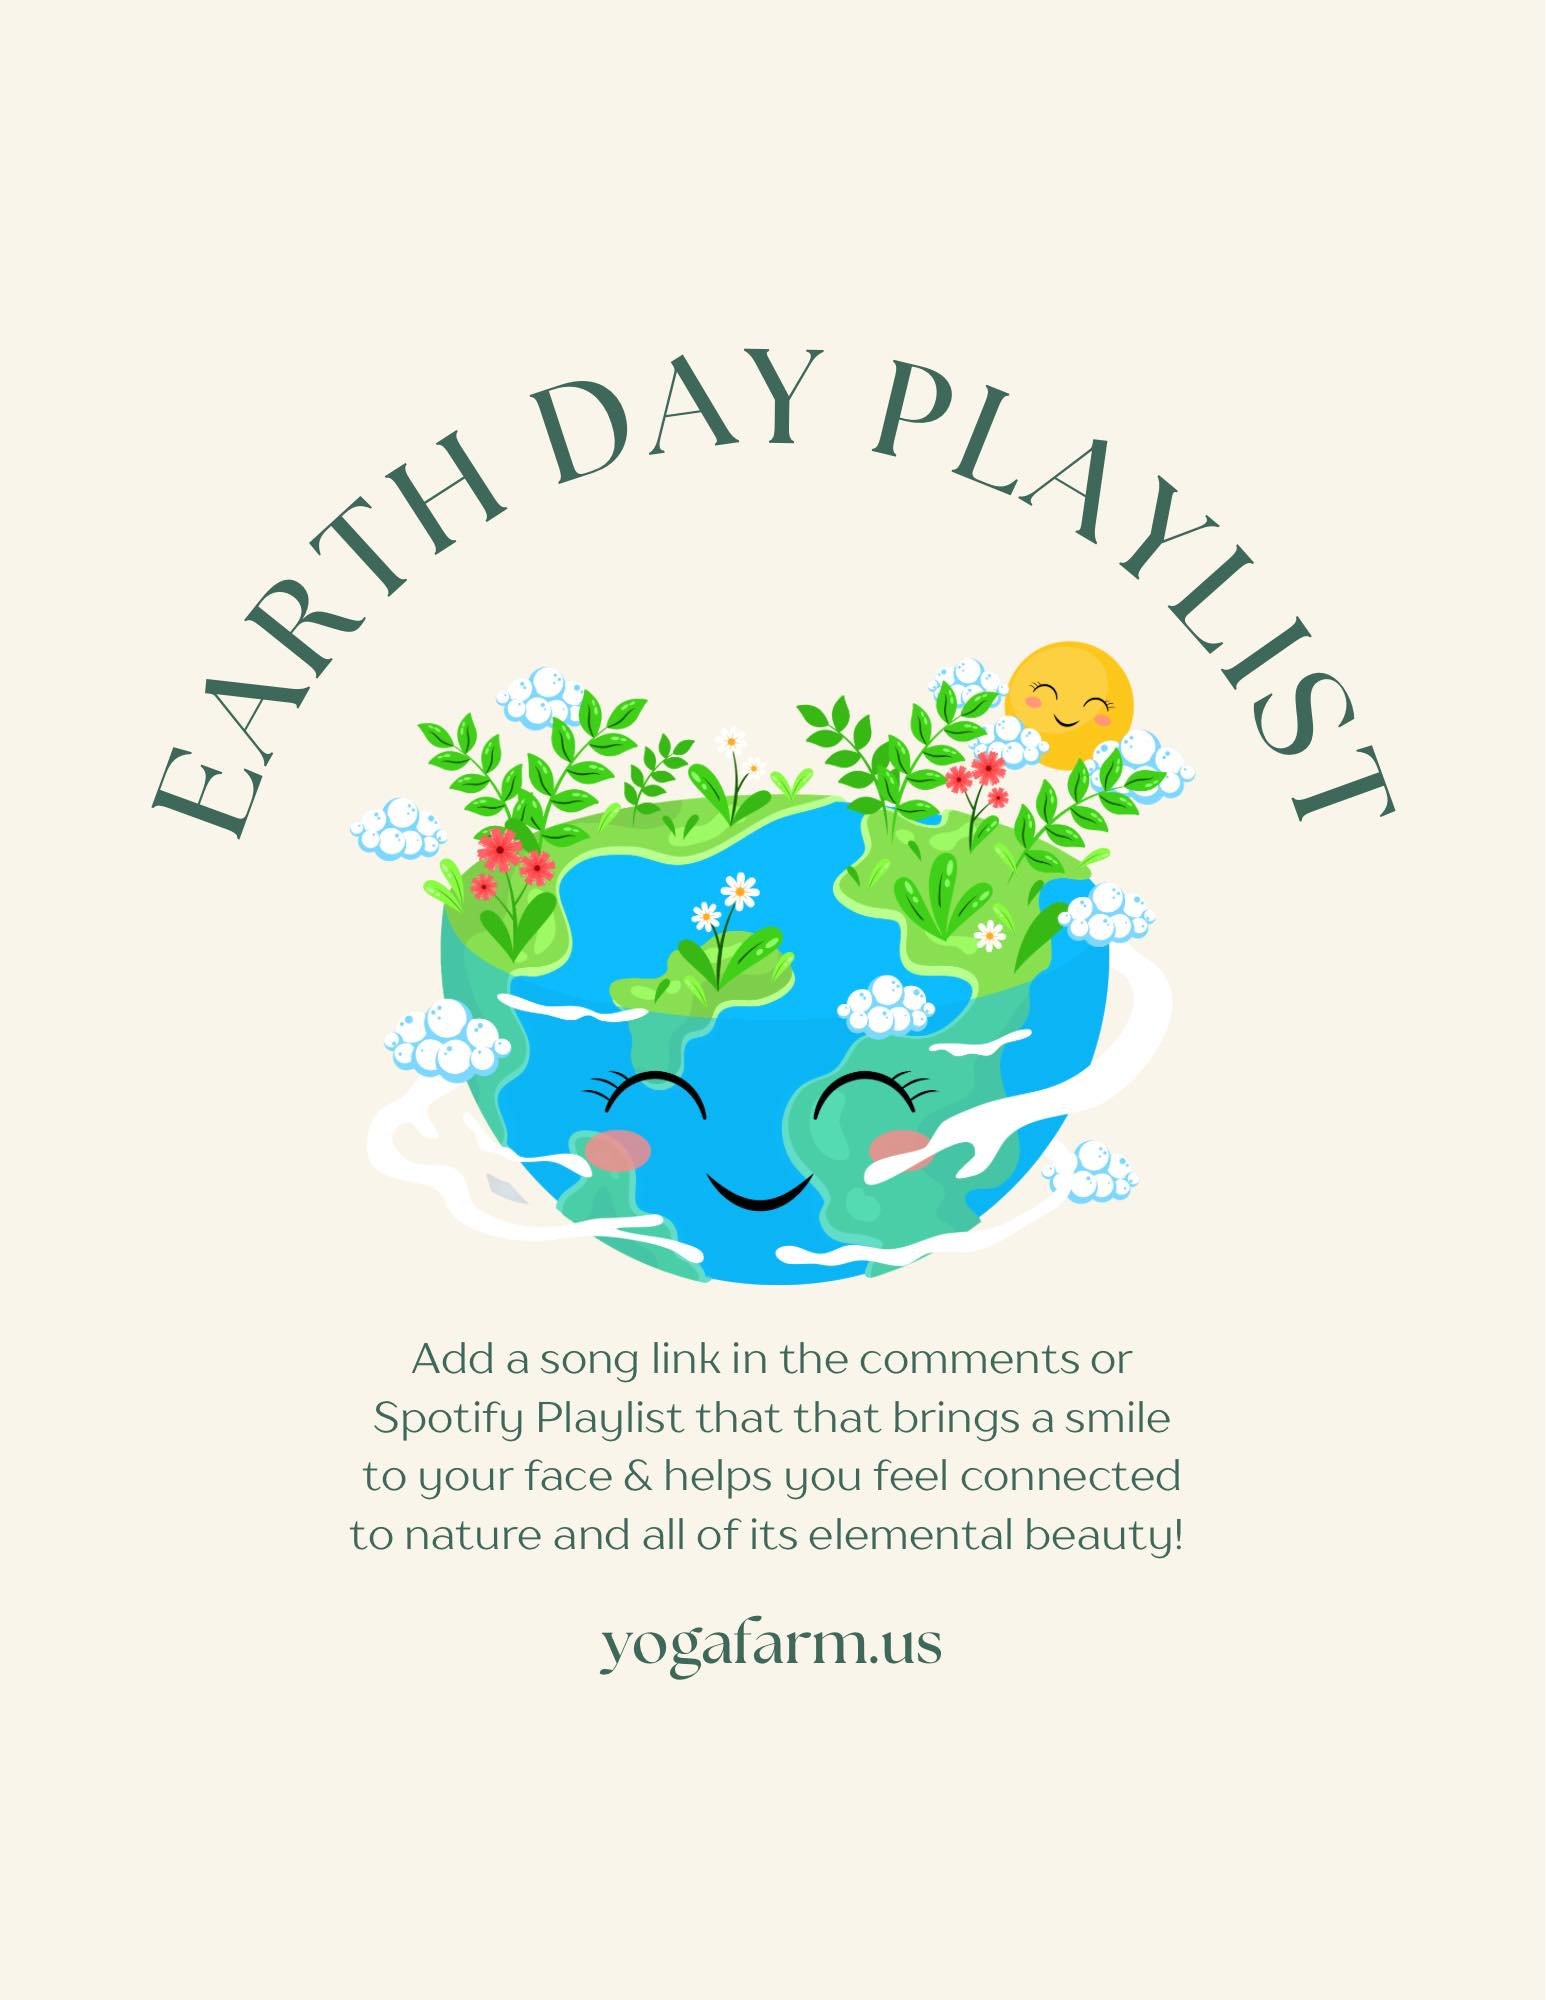 Let&rsquo;s create an epic playlist! 🎶 

https://open.spotify.com/playlist/5n9PA2GwUzvKwL4gfWAuj4?si=TGDn4ojvTV-3aiJirYbGEw&amp;pi=u-GuT1QHGPSHqE

#music #yoga #musicplaylist #nature #connection #goodvibes